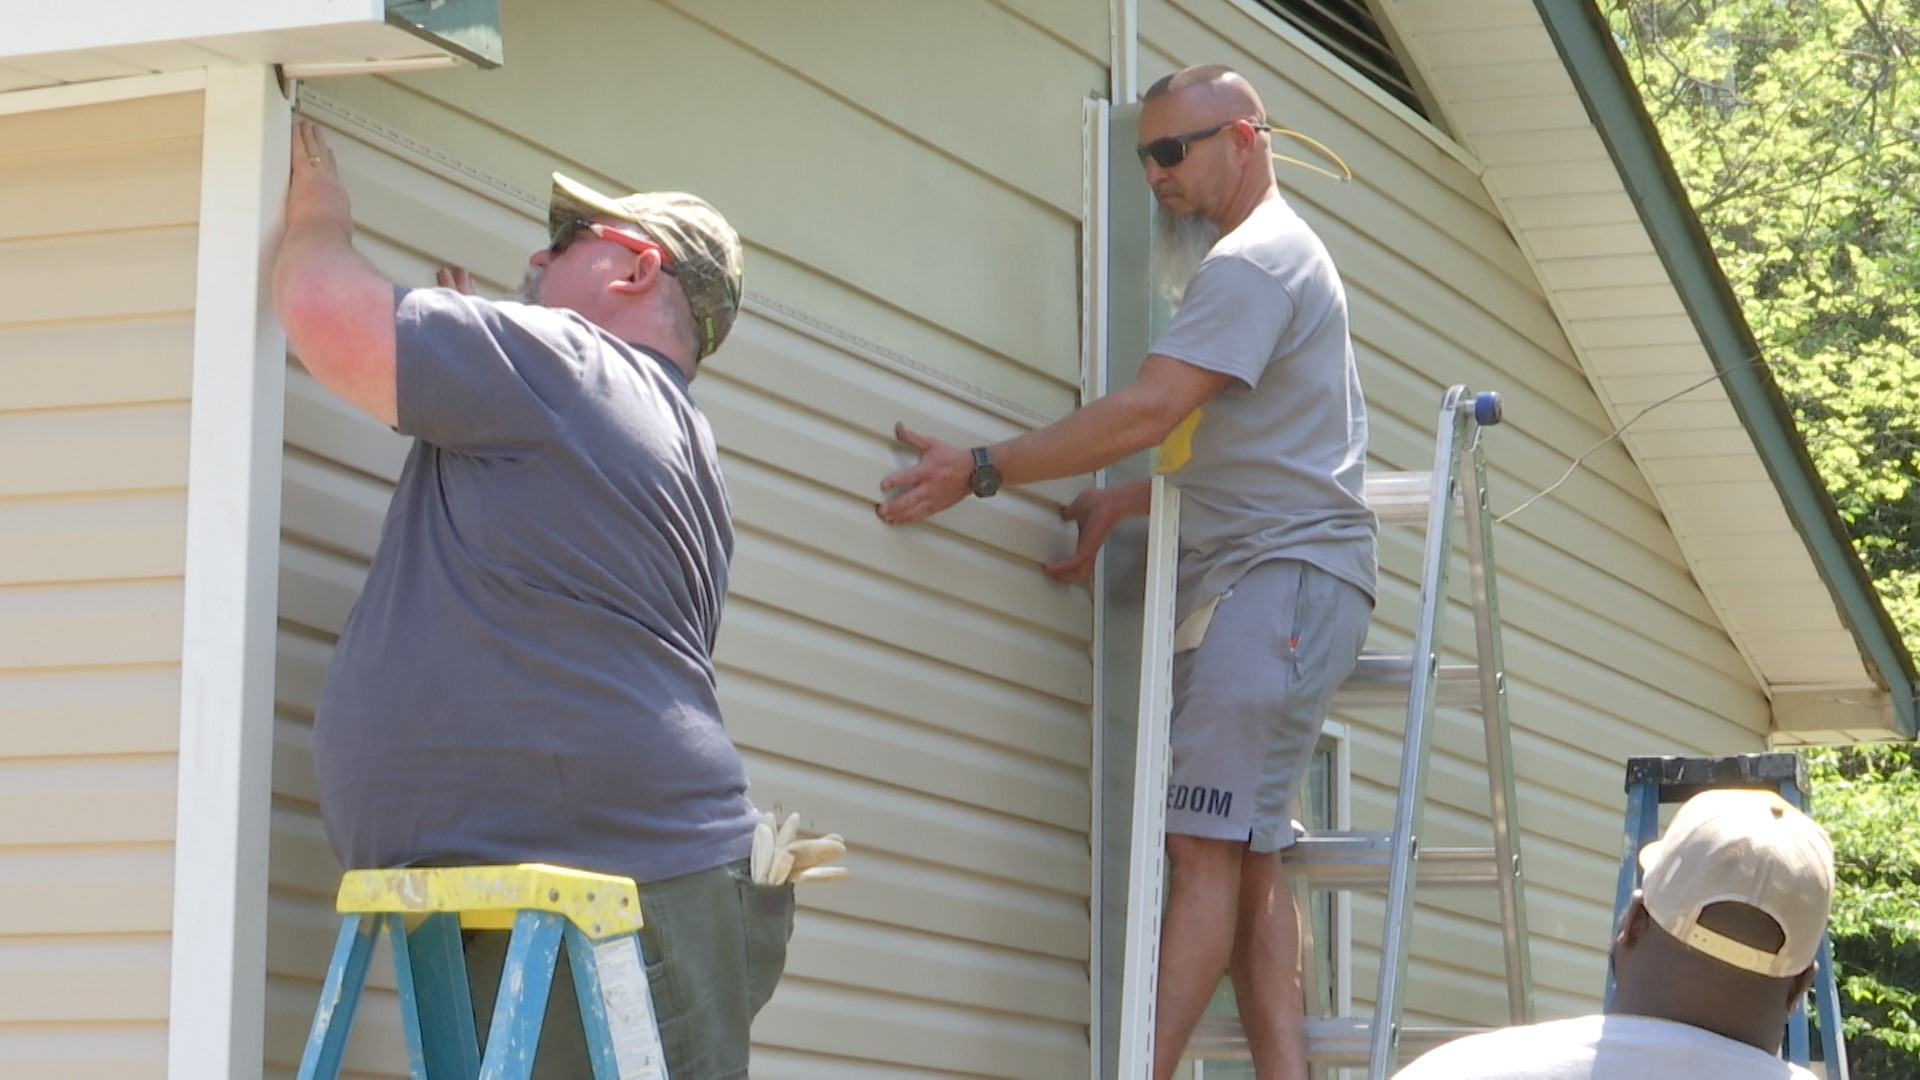 Huntsville's Community Development Department is spotlighting a local home rehabilitation project supported with Community Development Block Grant funds.